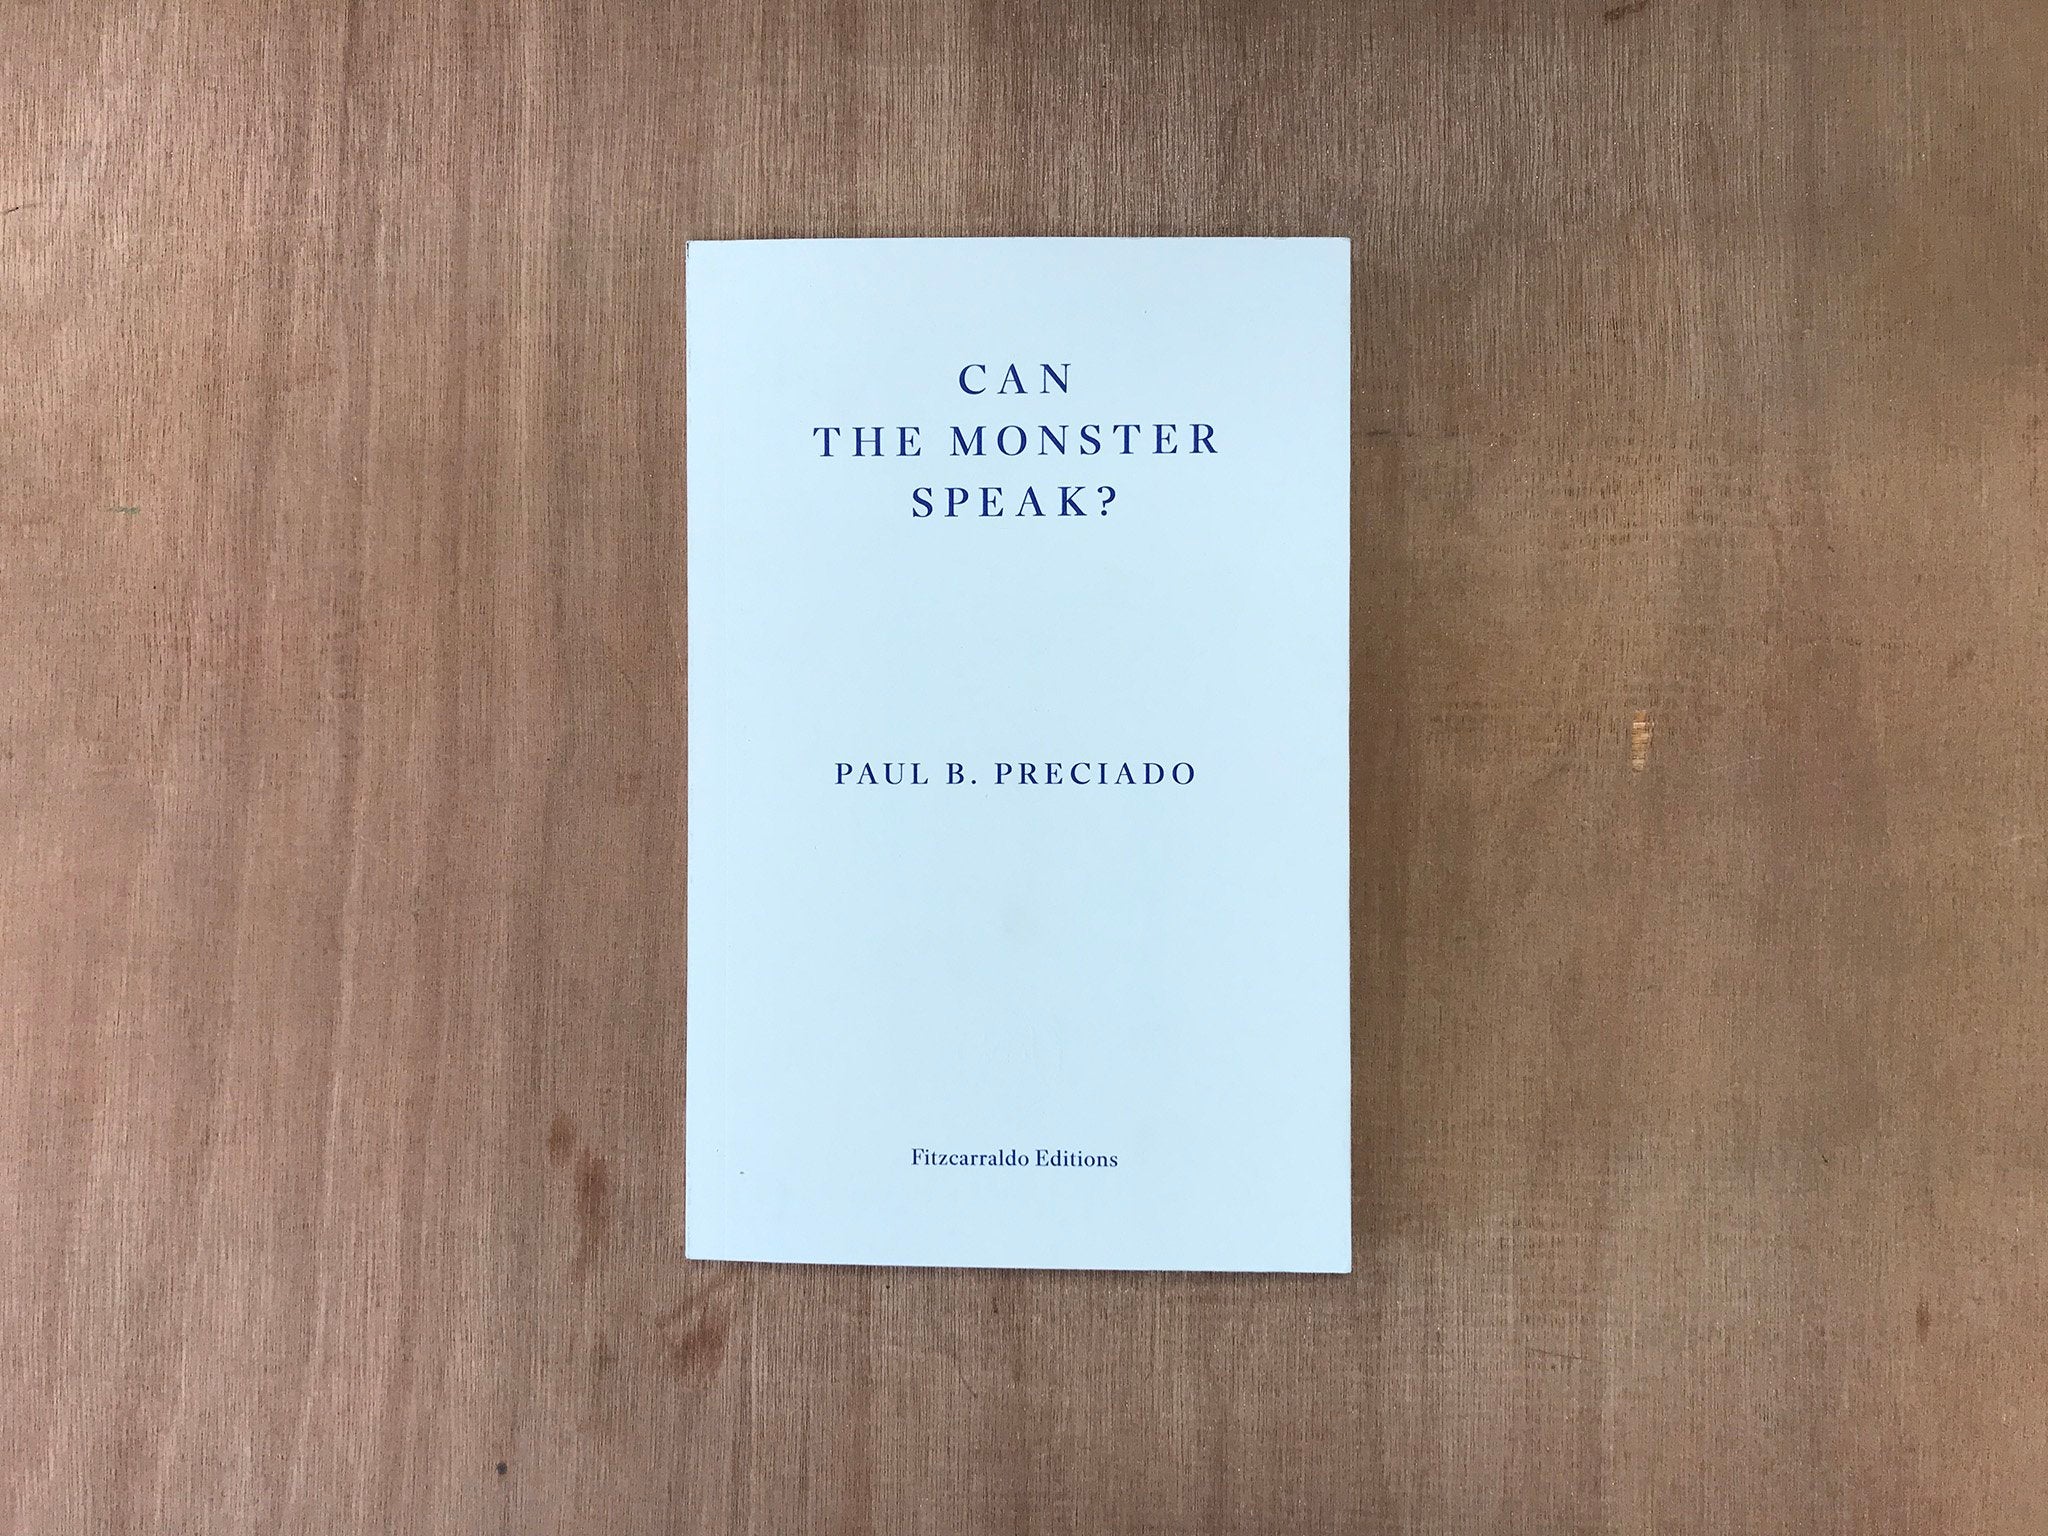 CAN THE MONSTERS SPEAK? by Paul B. Preciado